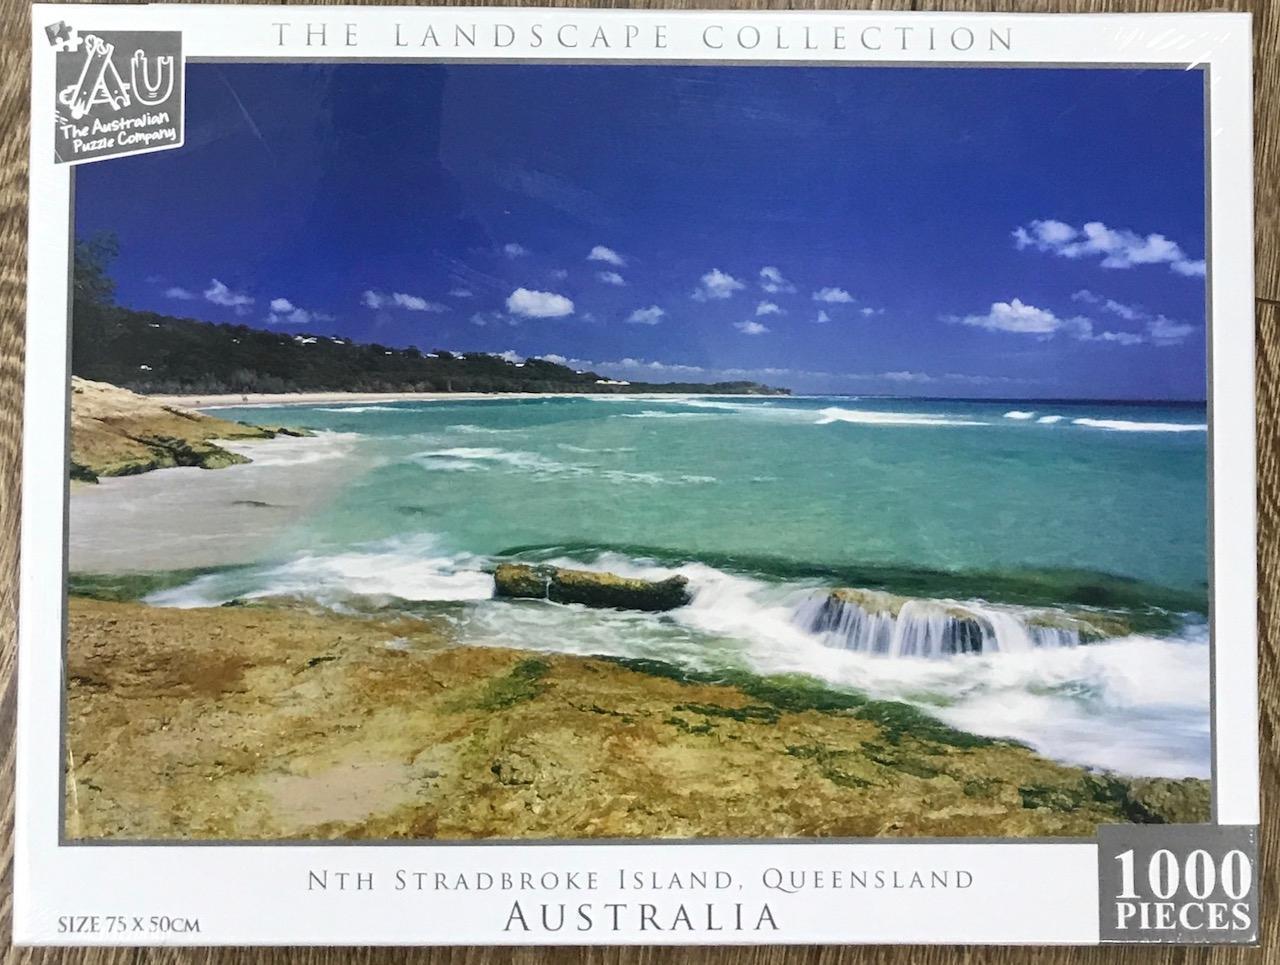 The Landscape Collection North Stradbroke Island Queensland Australia 1000 Pieces Jigsaw Puzzle Fun Activity Gift Idea